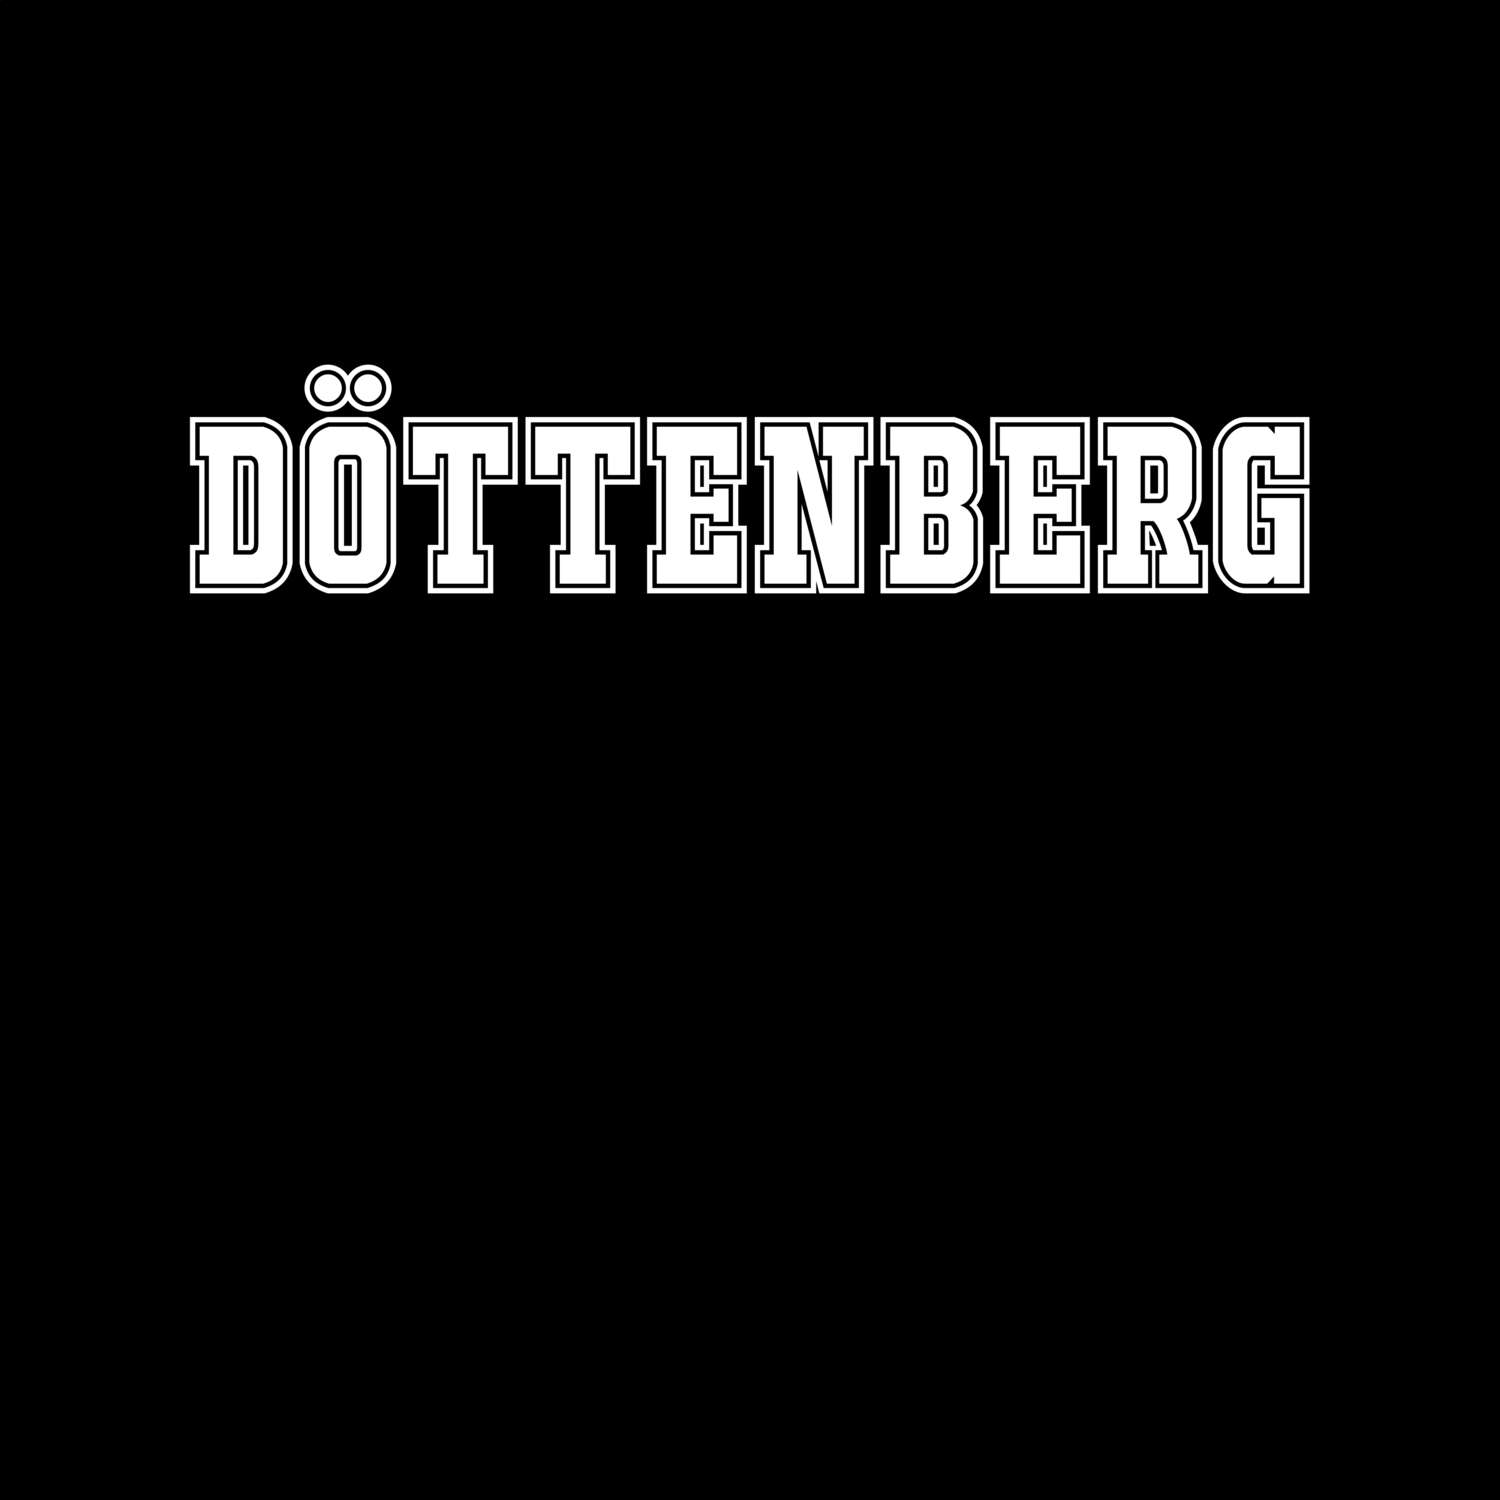 Döttenberg T-Shirt »Classic«